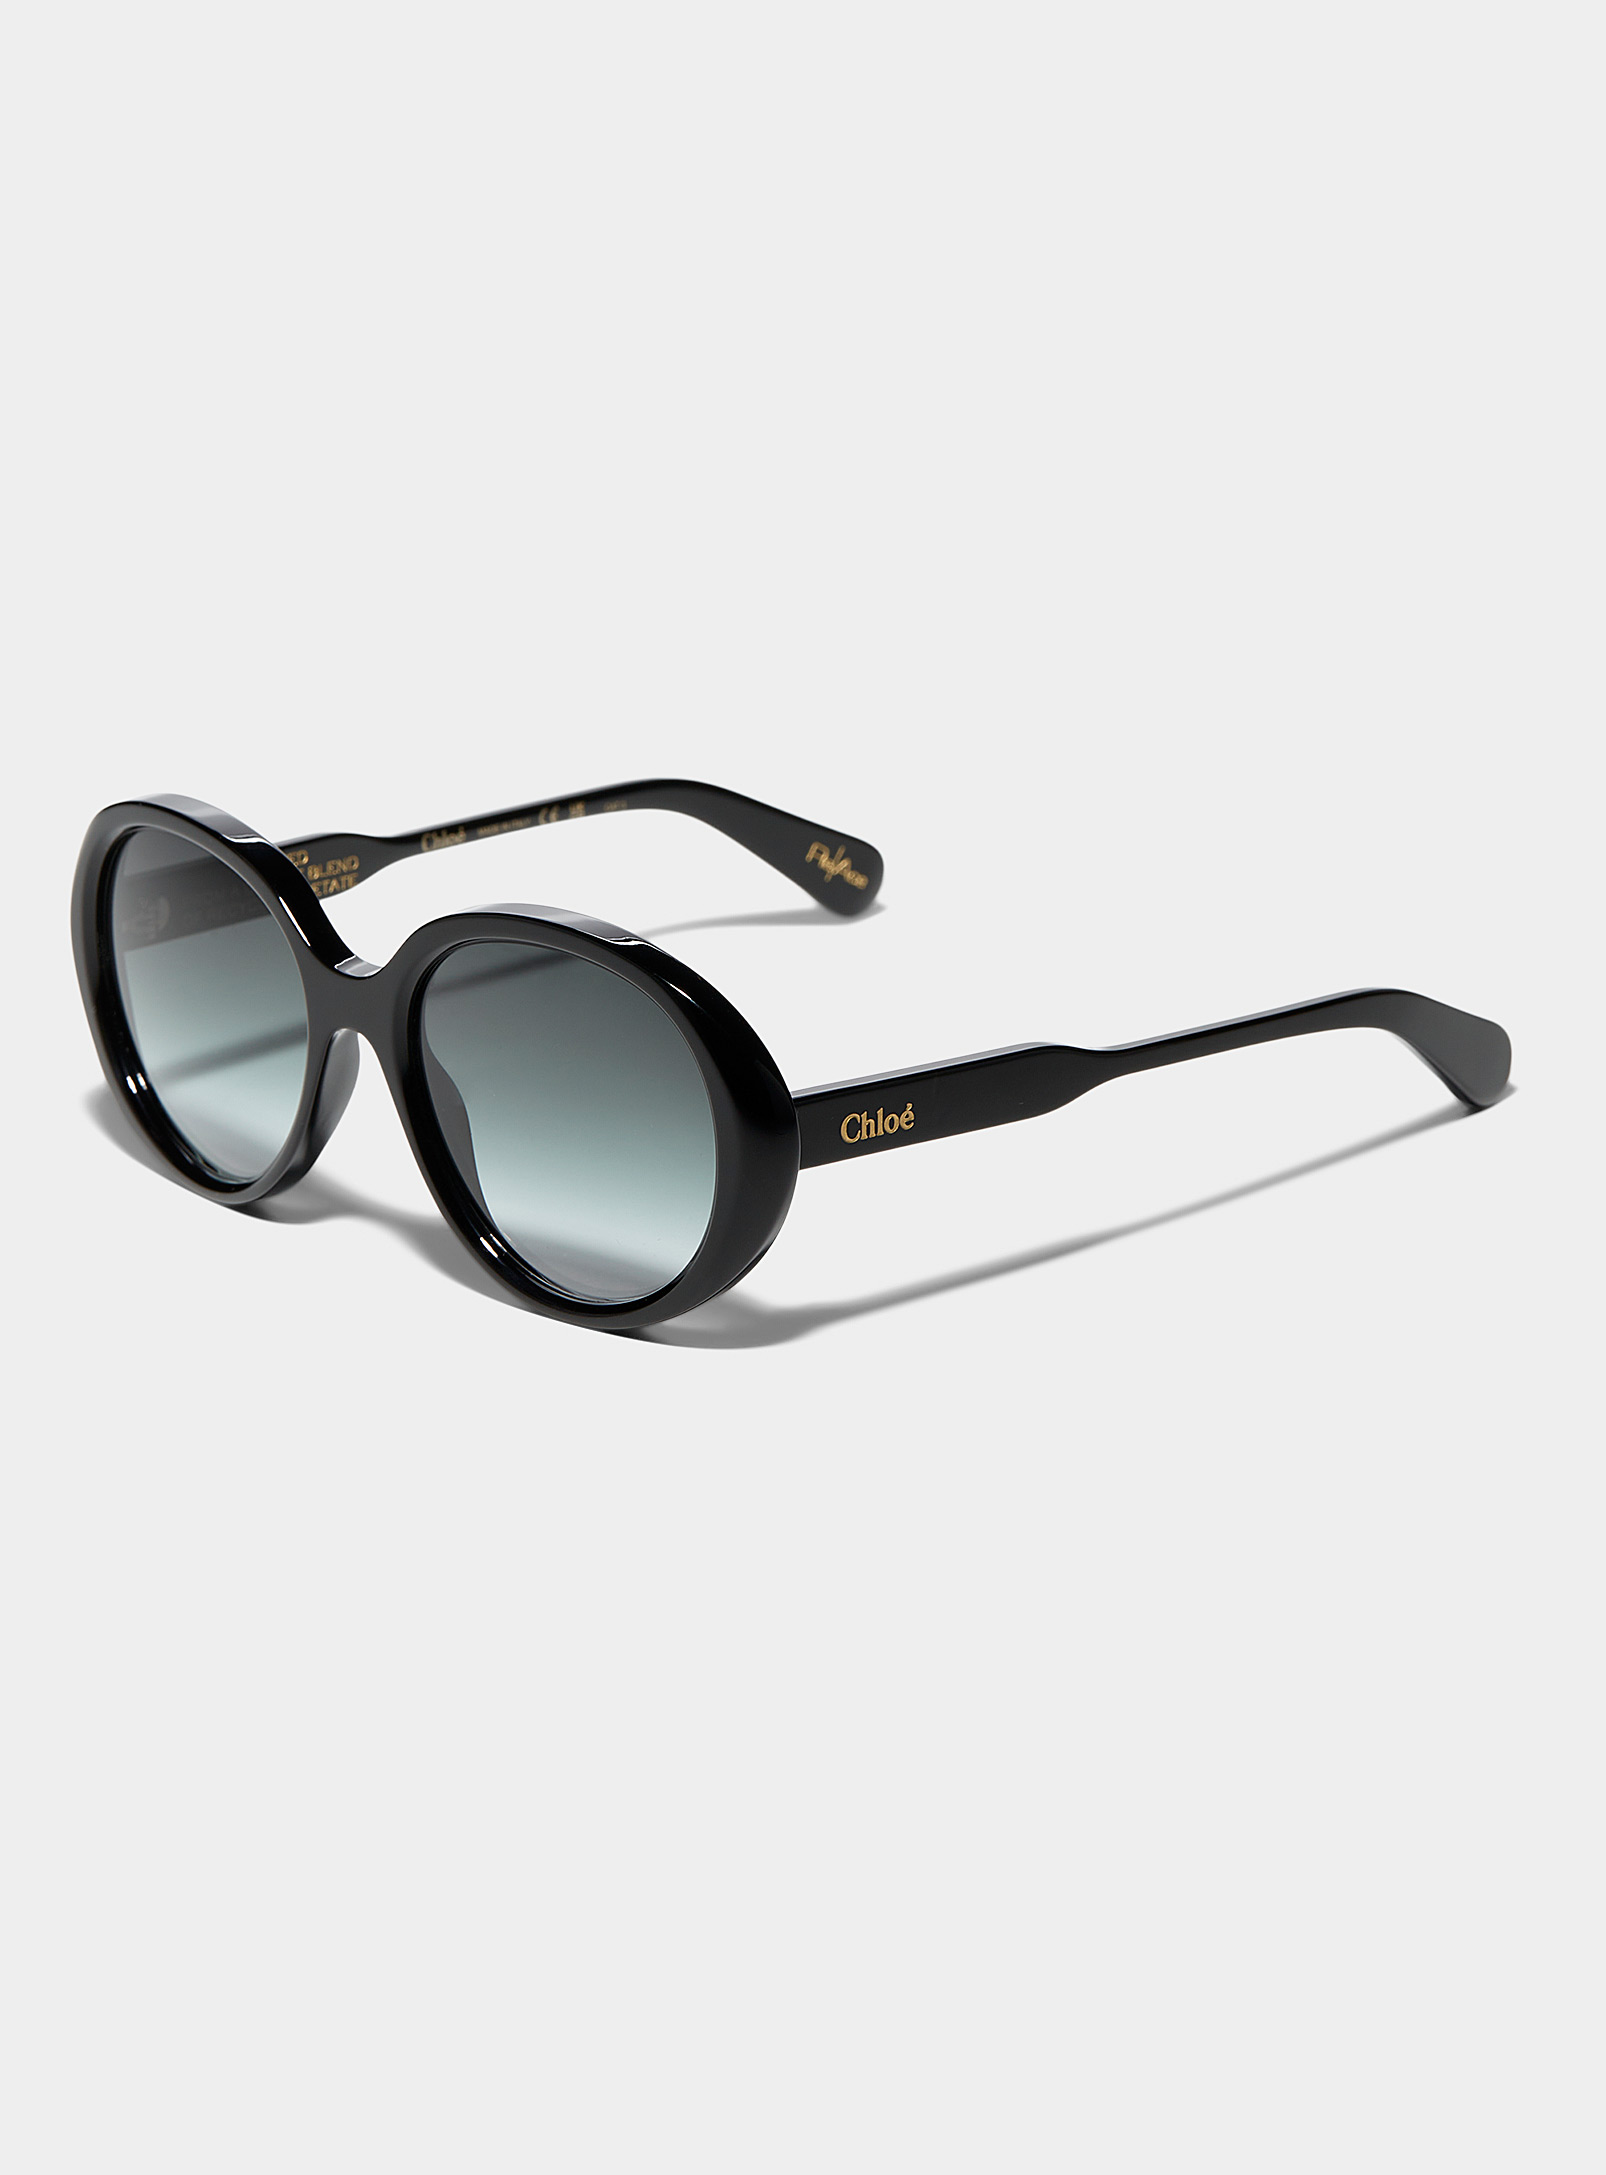 Chloé - Women's Gayia round sunglasses